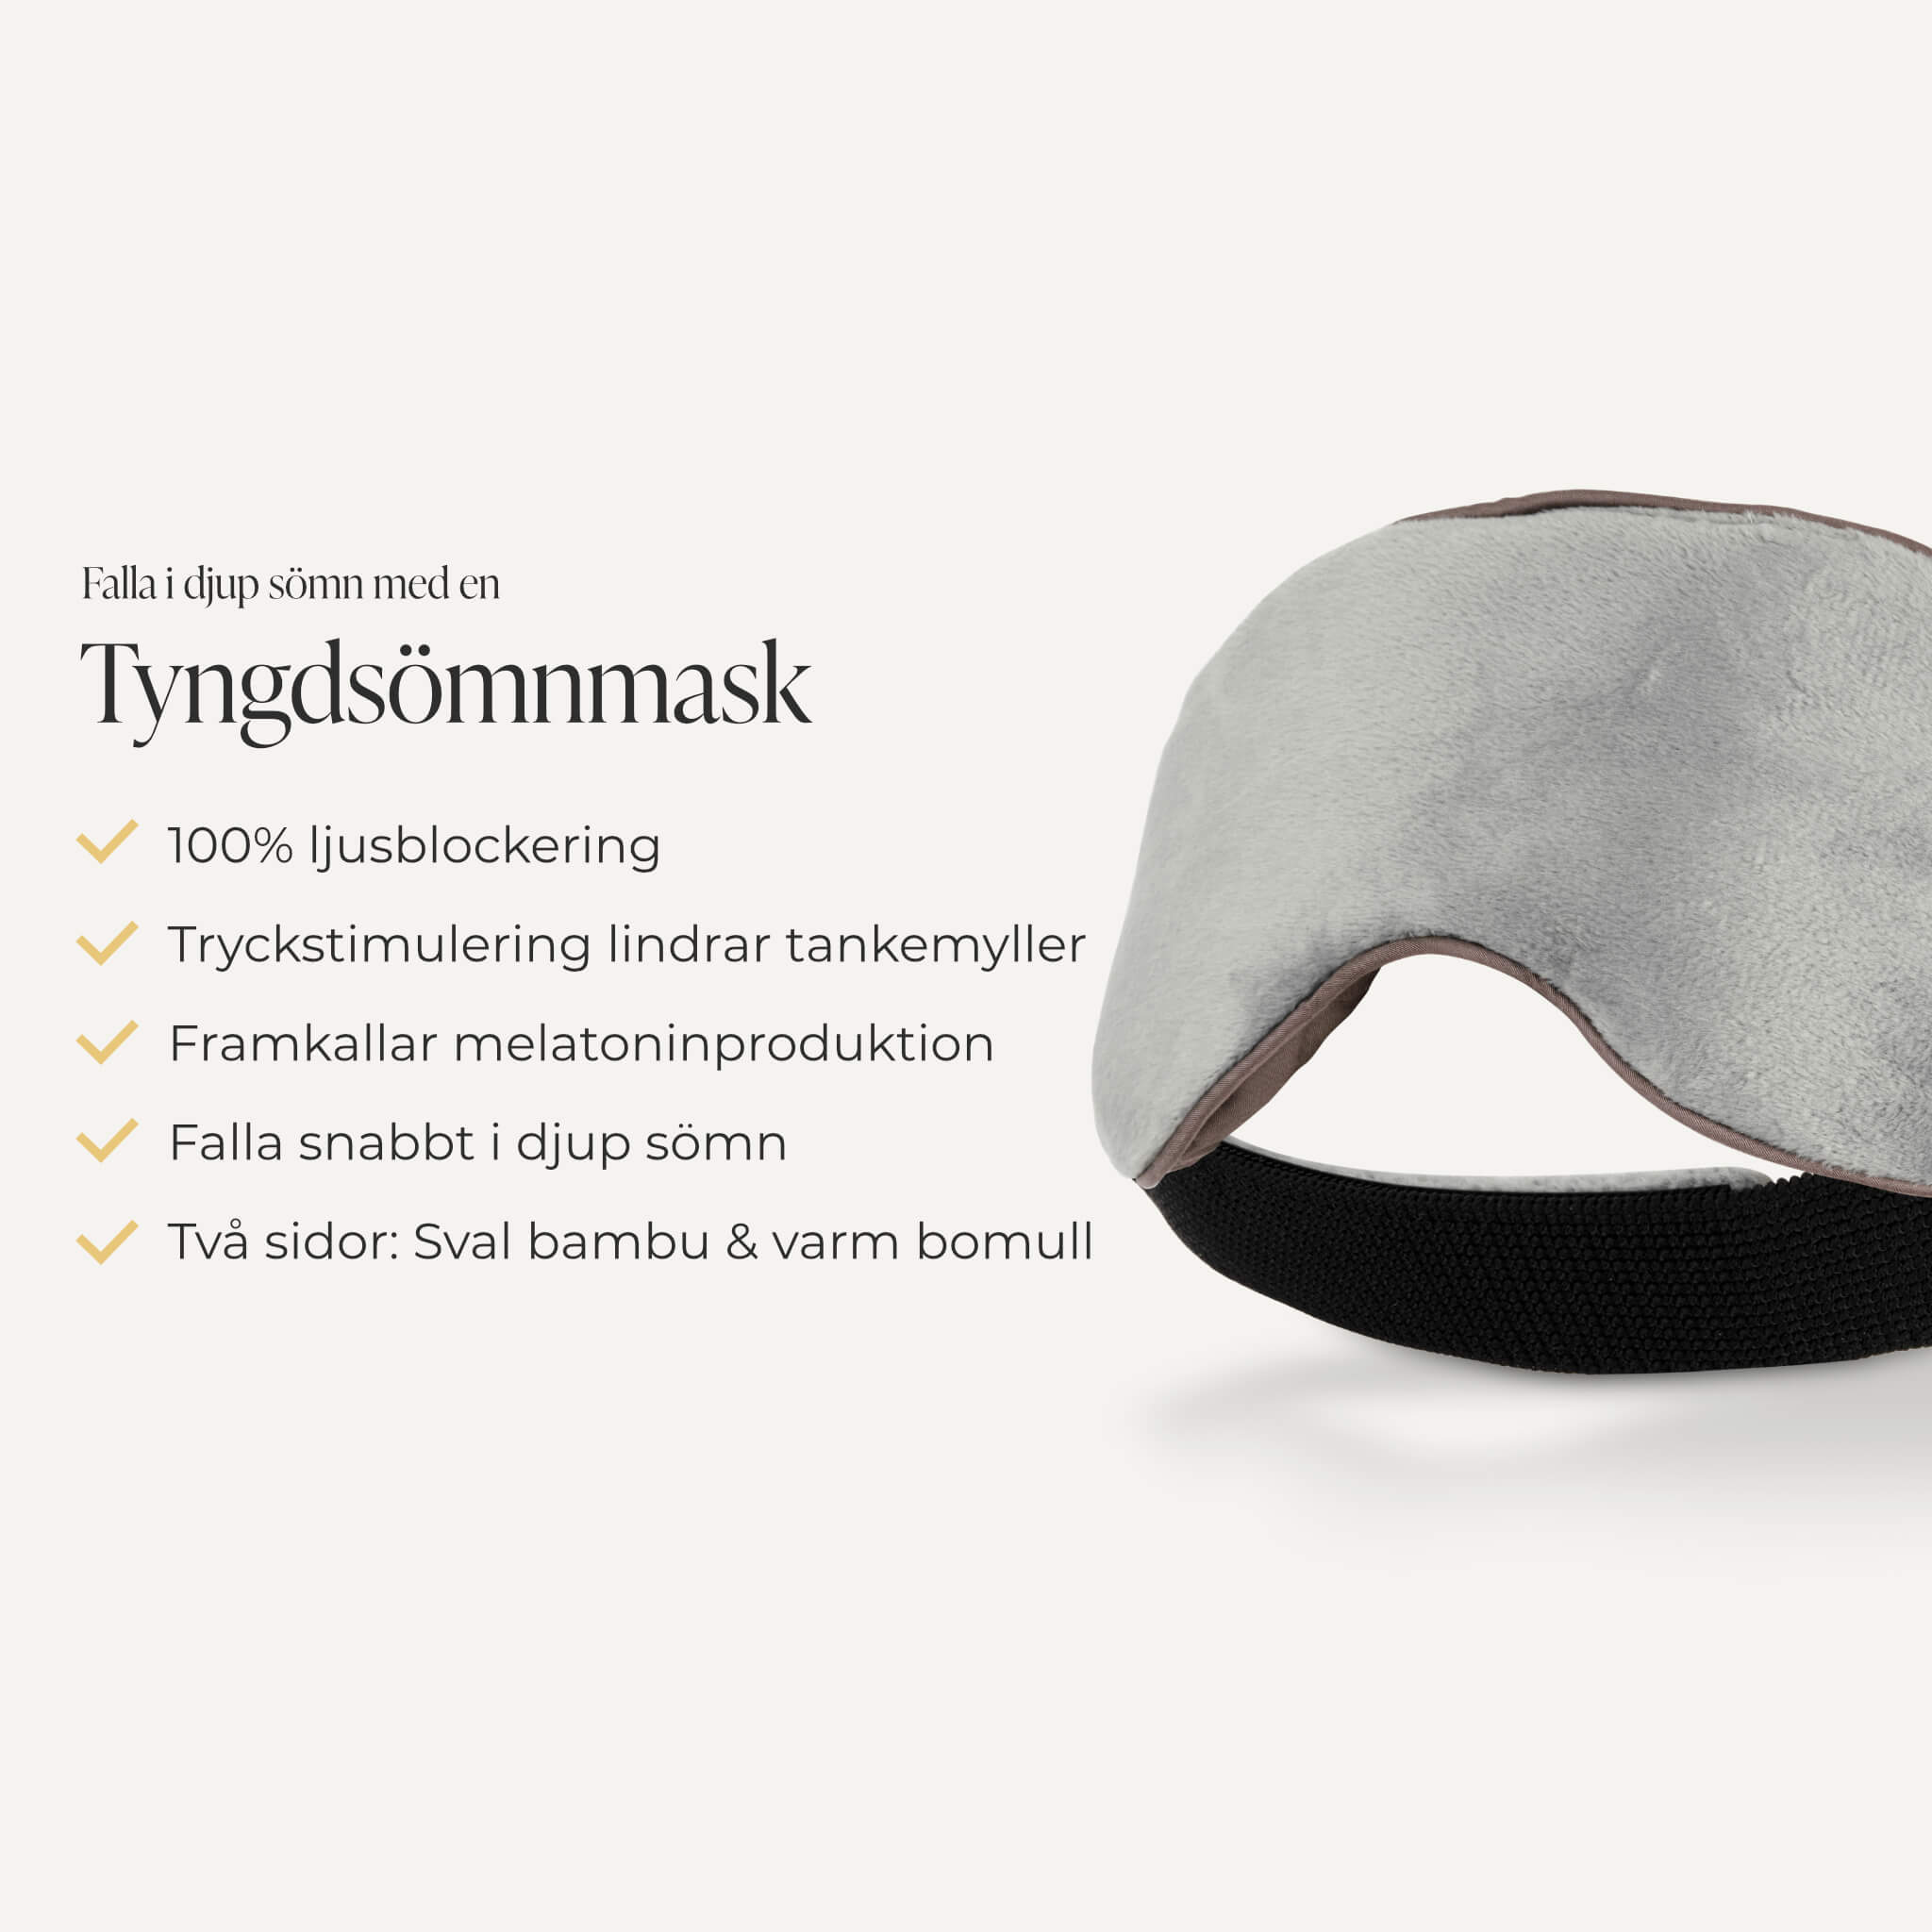 Comforth Tyngdsovmask